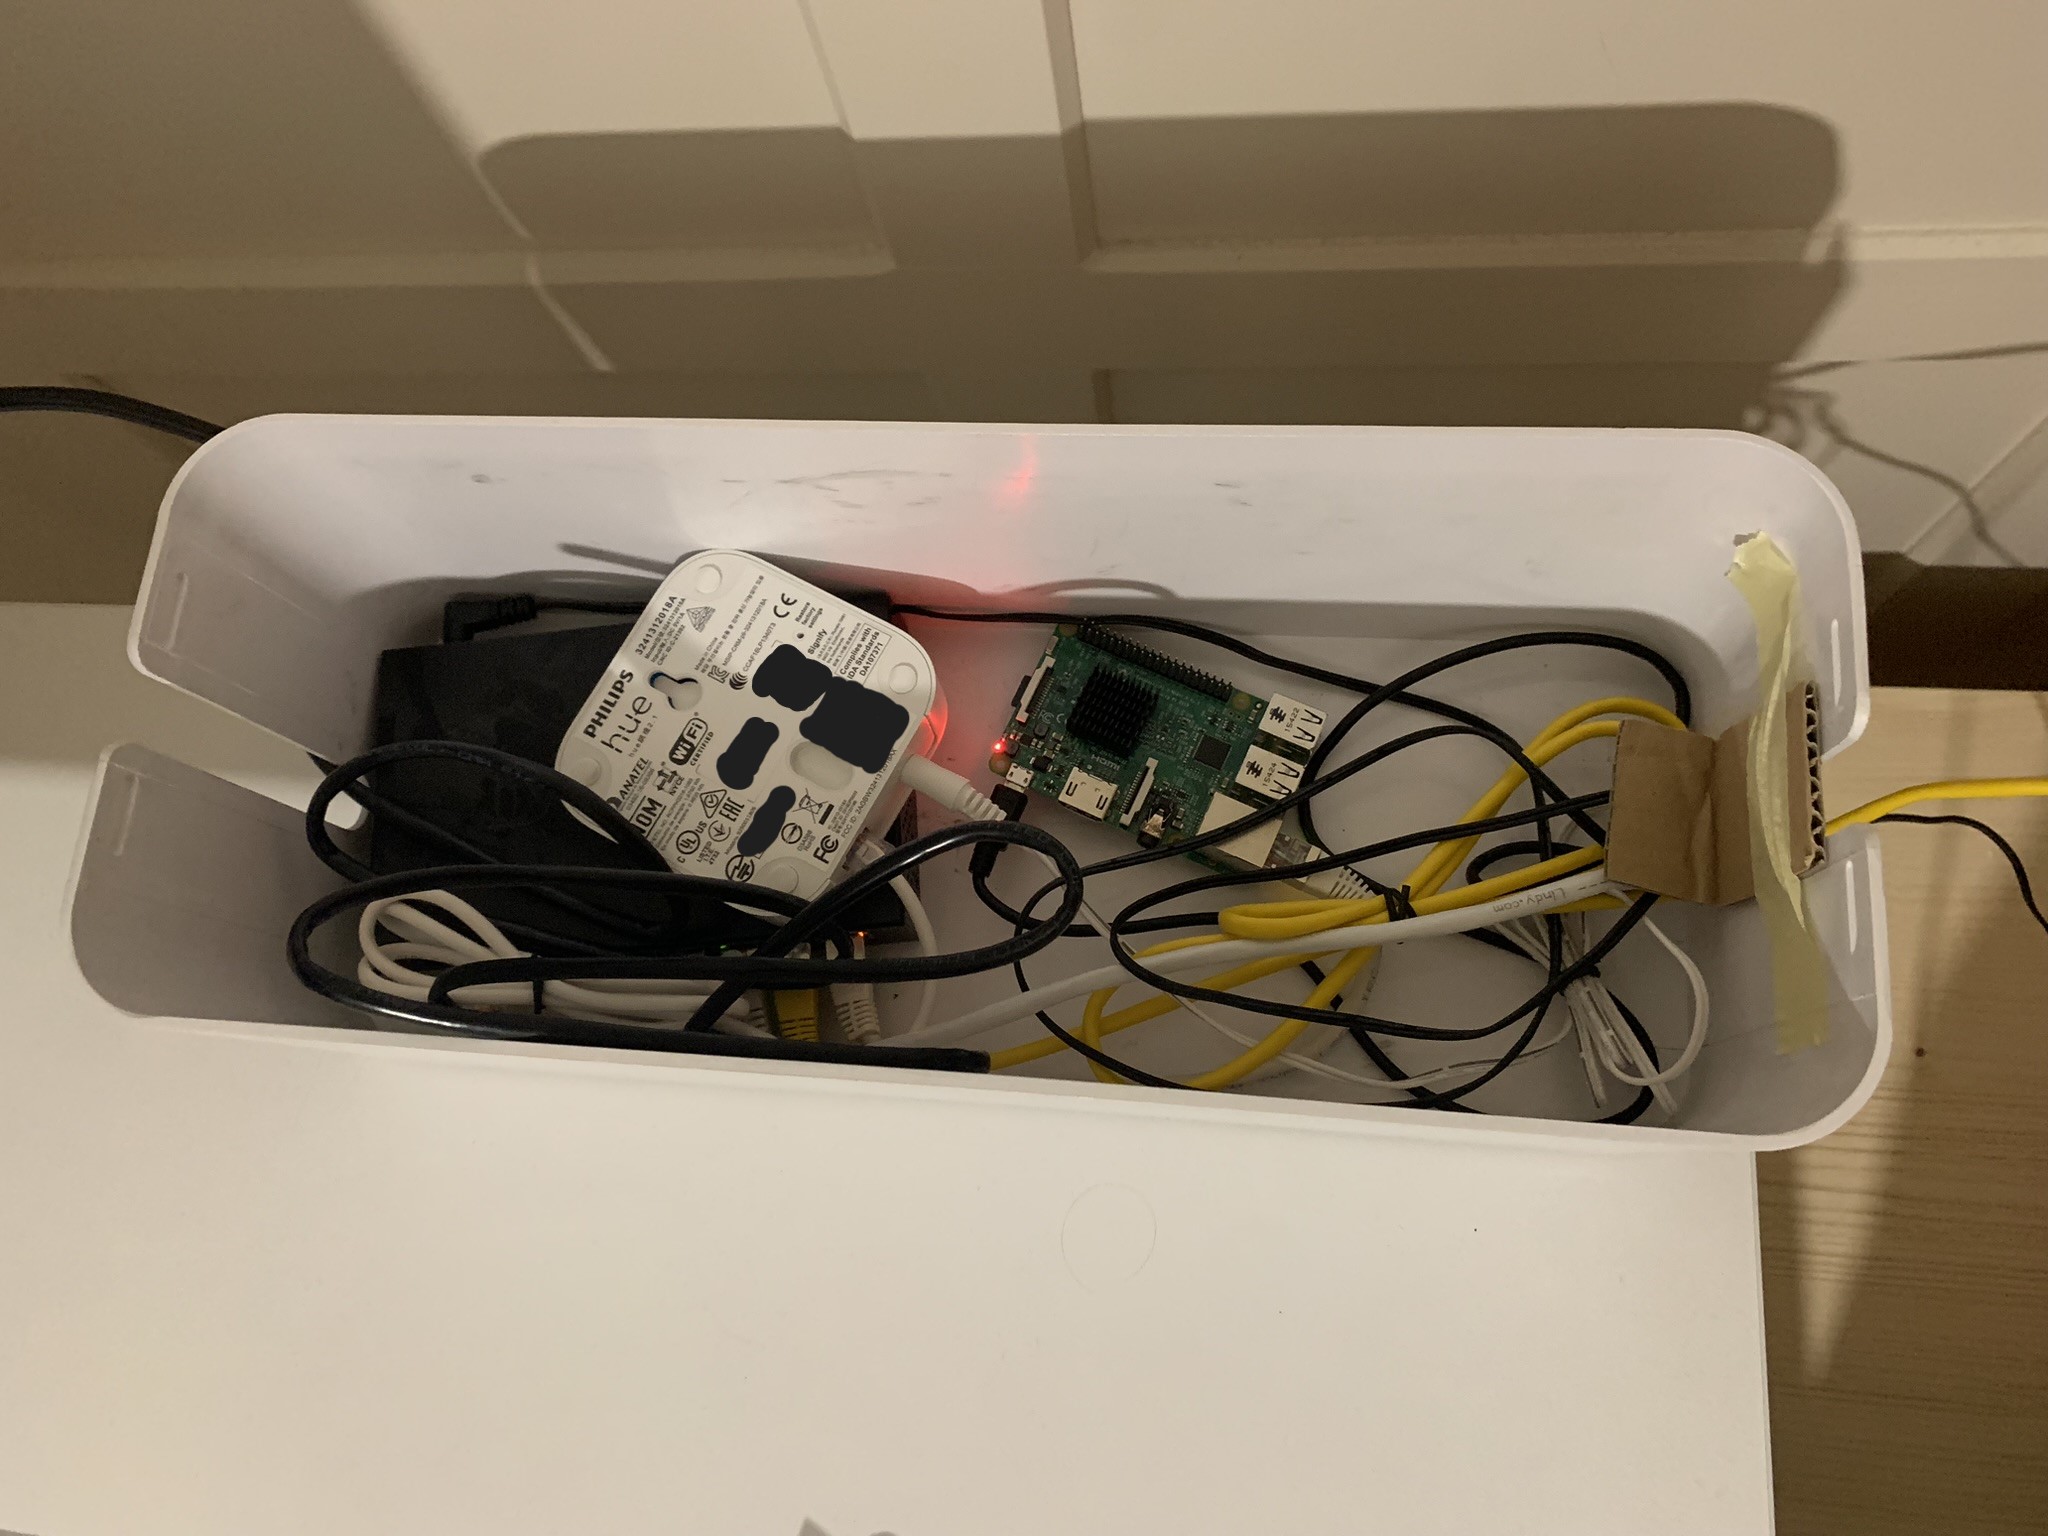 Raspberry Pi, Philips Hue Bridge, and a Switch inside a box